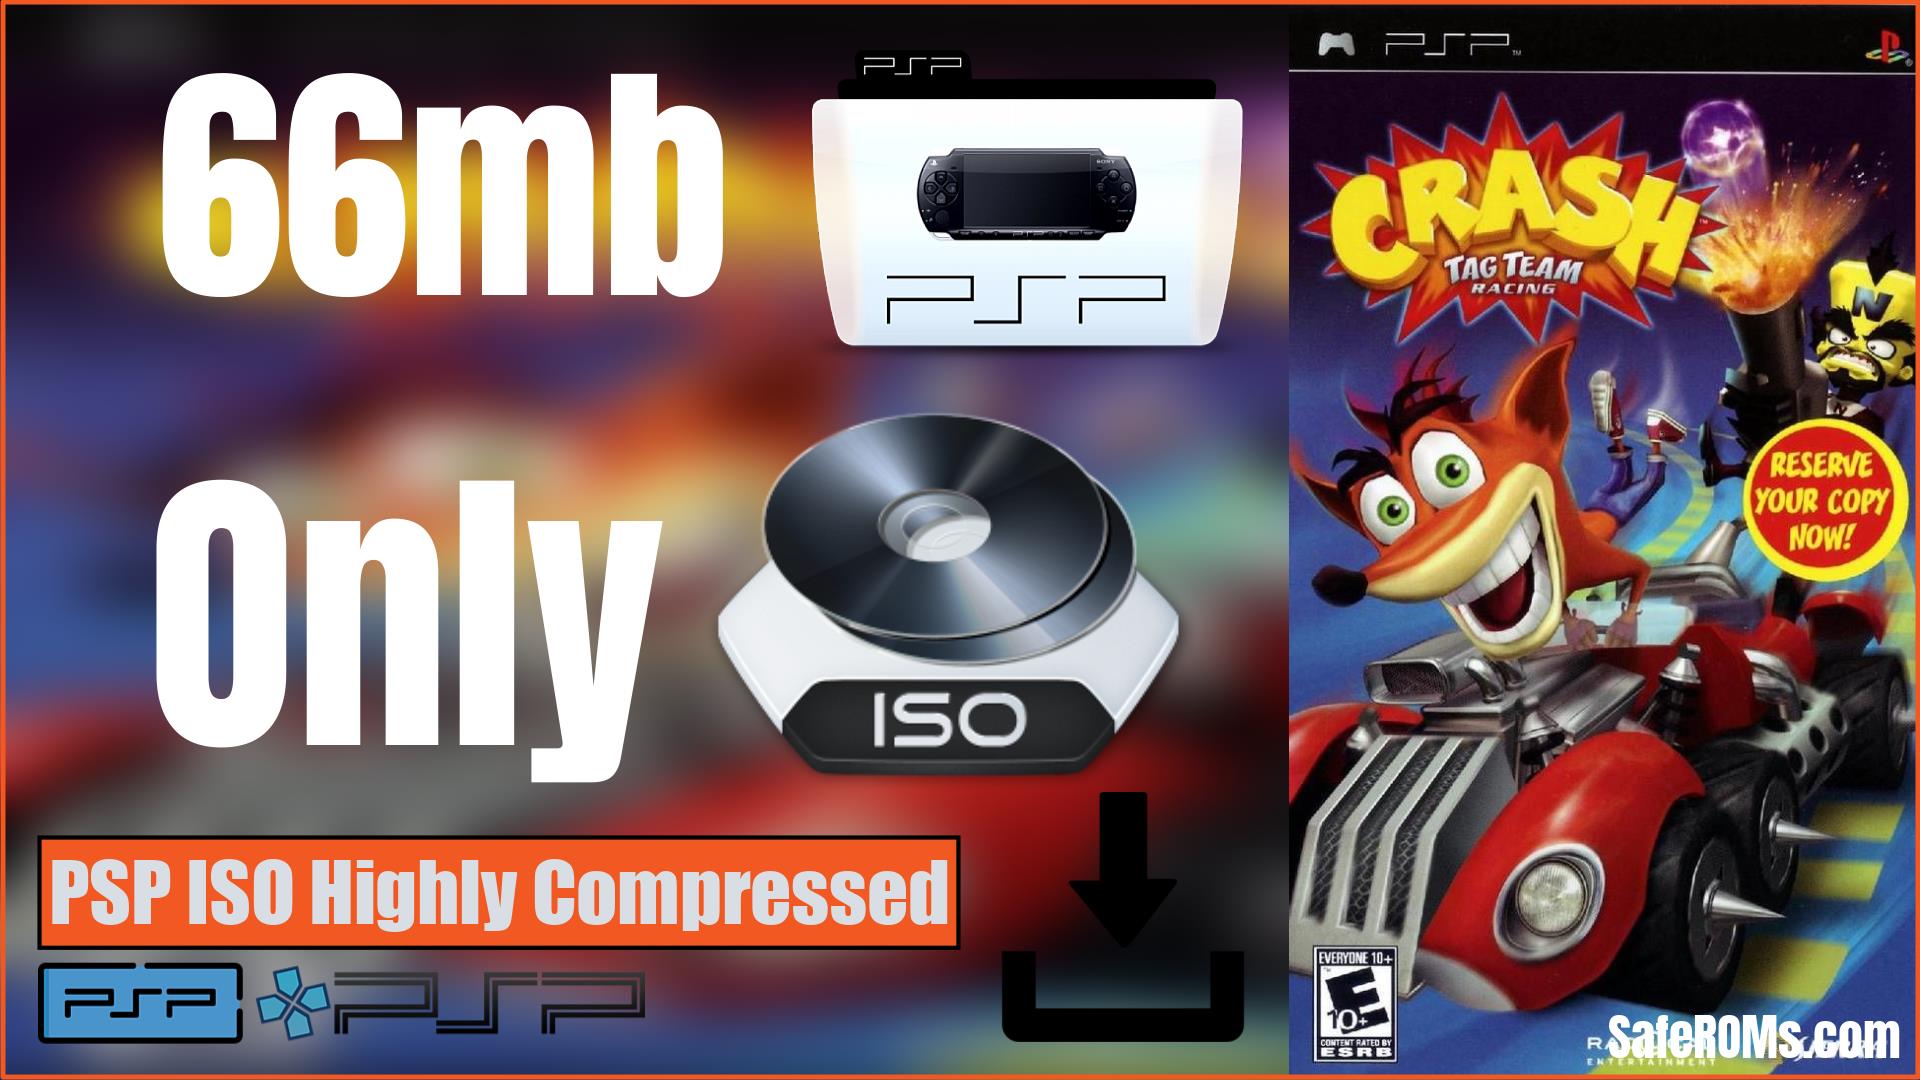 Crash Tag Team Racing PSP ISO Compressed (66mb) SafeROMs